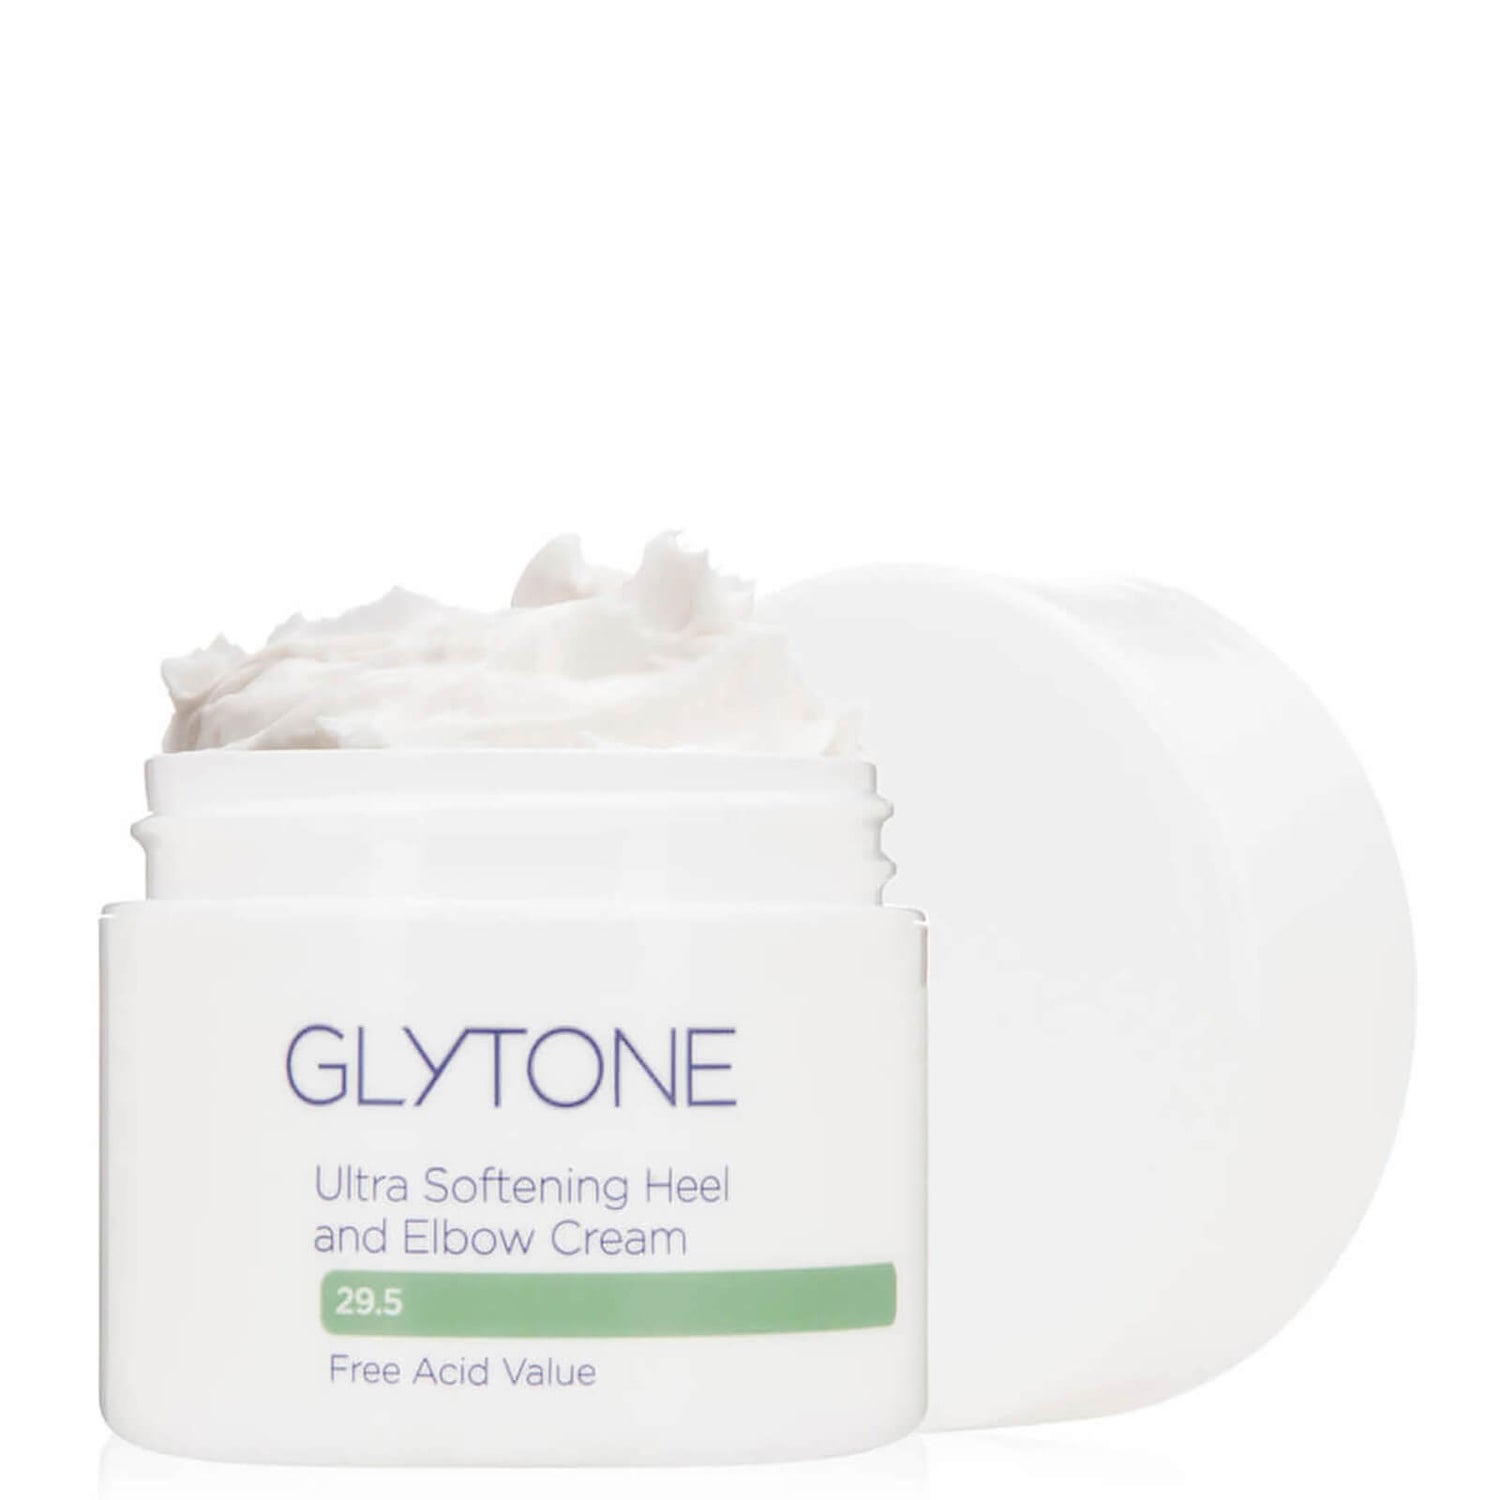 Glytone Ultra Softening Heel and Elbow Cream (1.7 oz.)